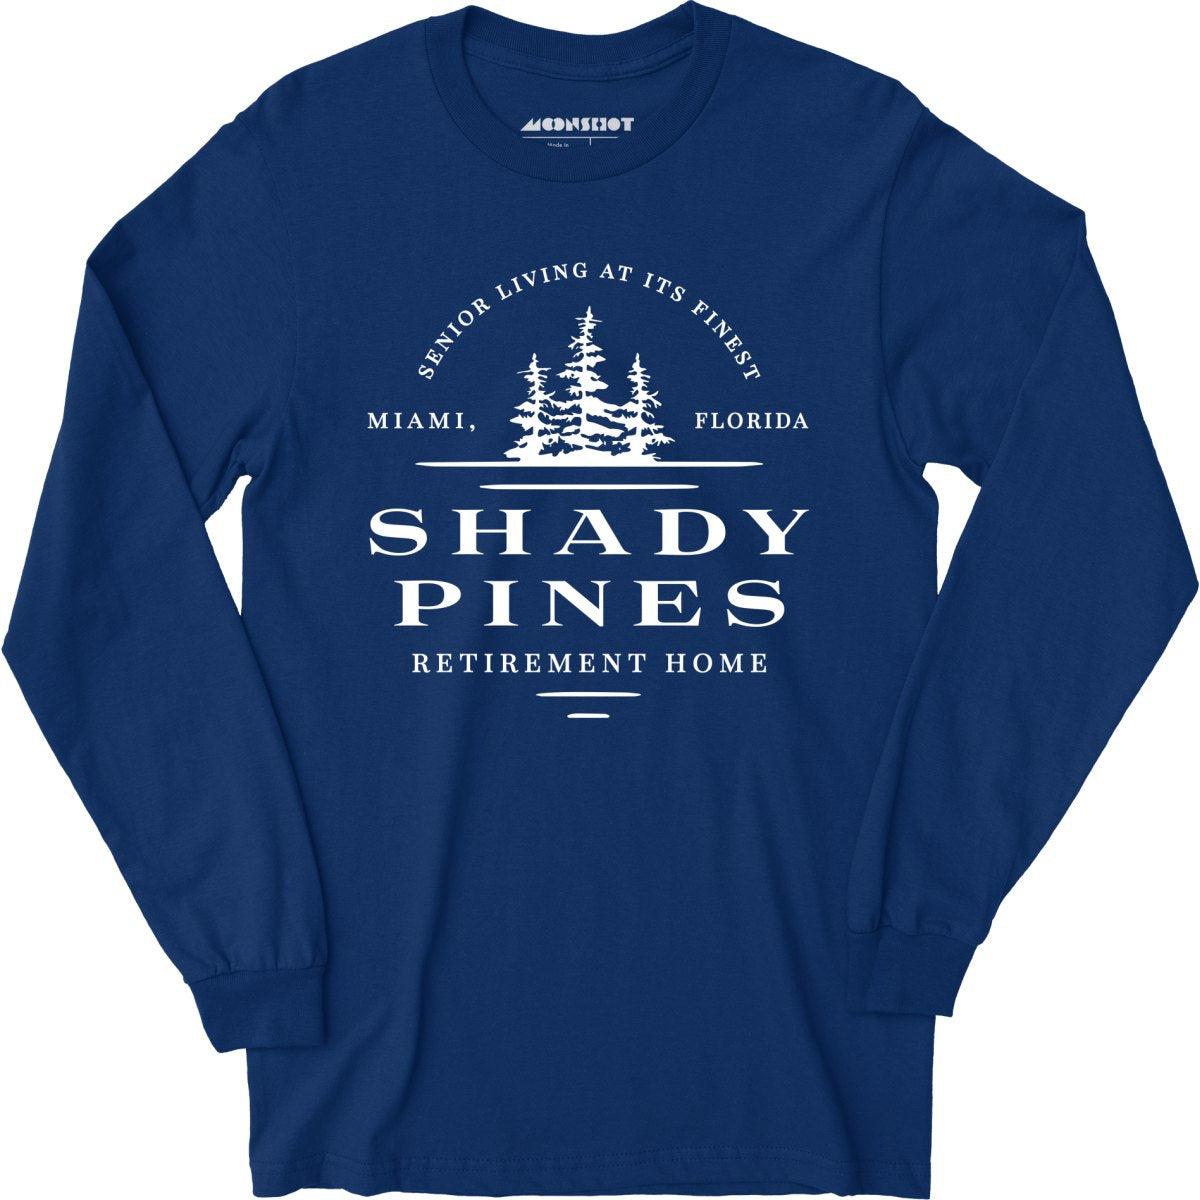 Shady Pines Retirement Home - Long Sleeve T-Shirt